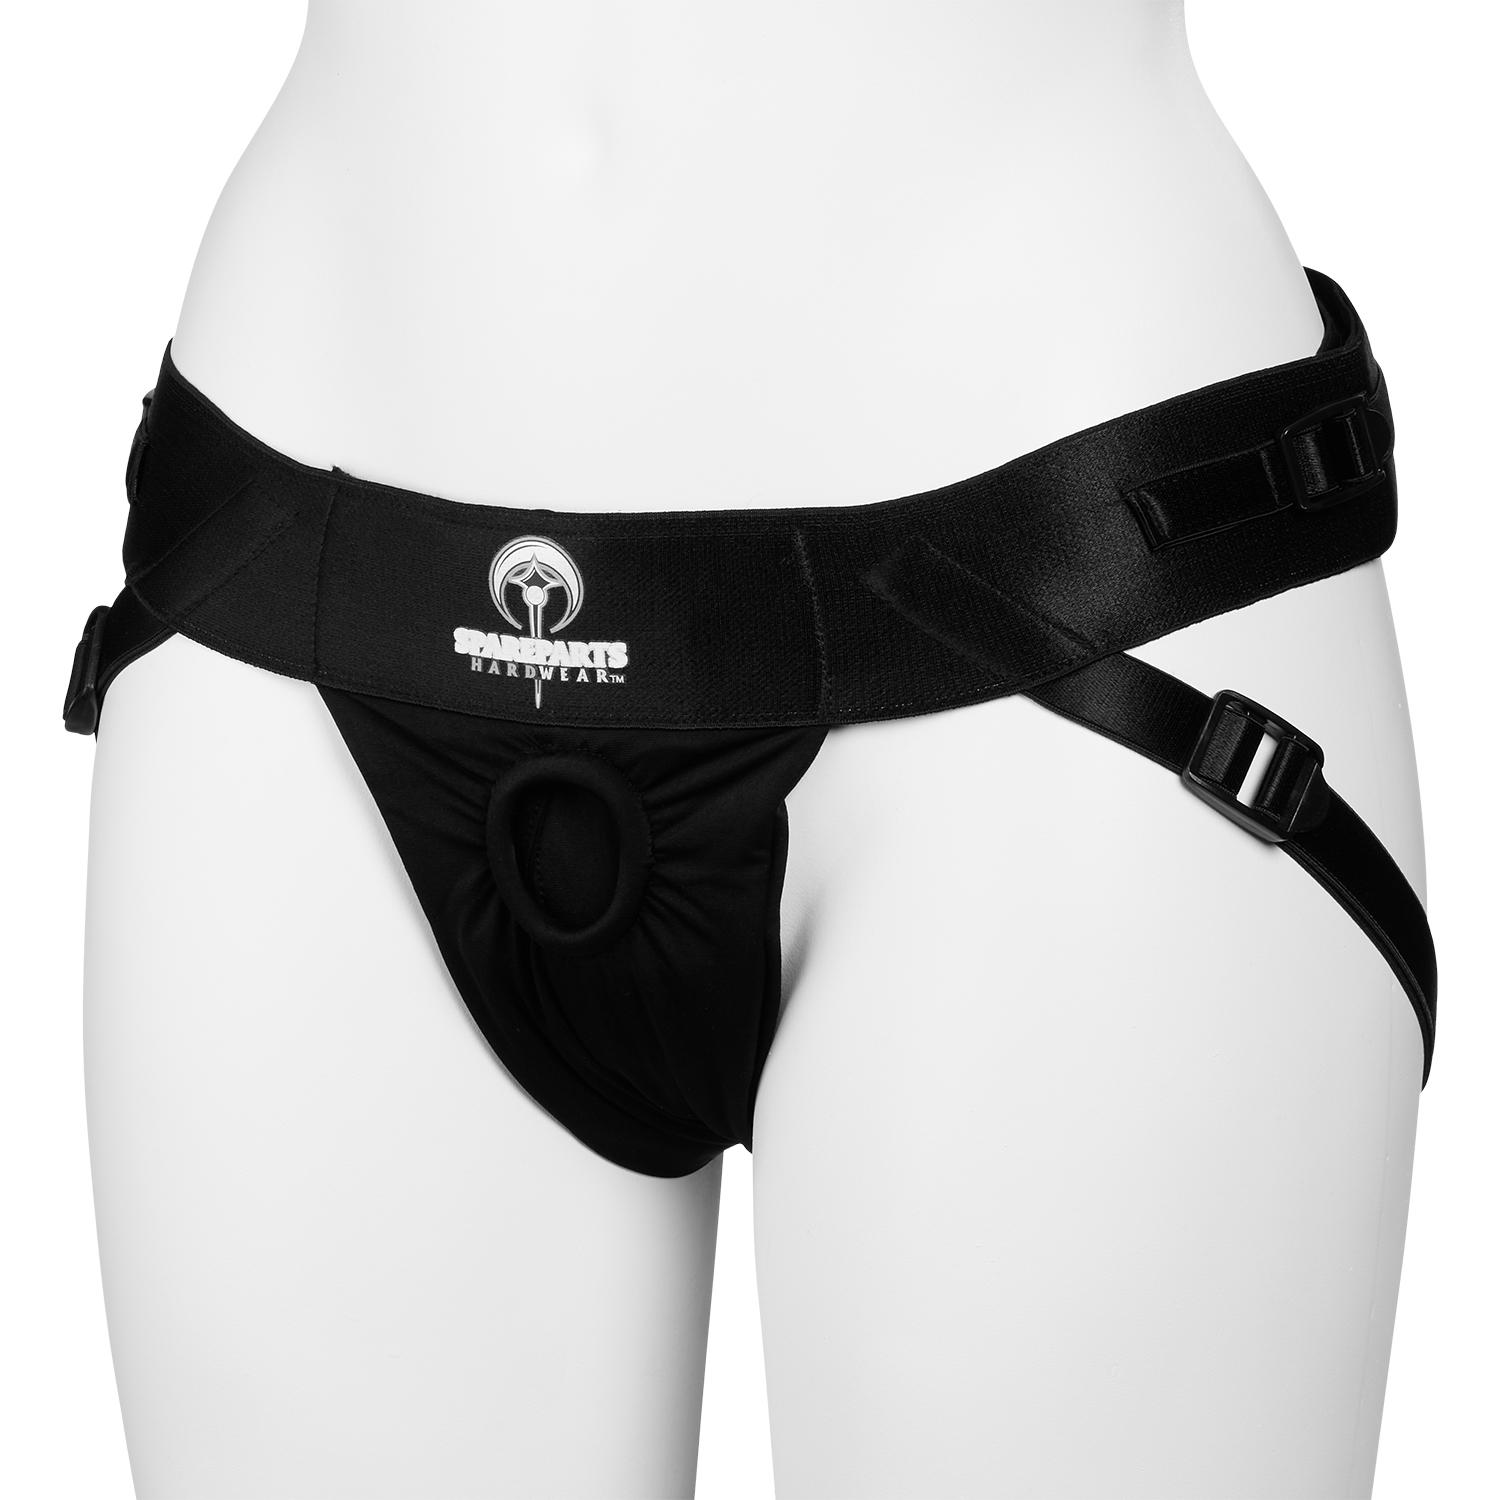 SpareParts HardWear Joque Unisex Harness - Black - L/XL thumbnail